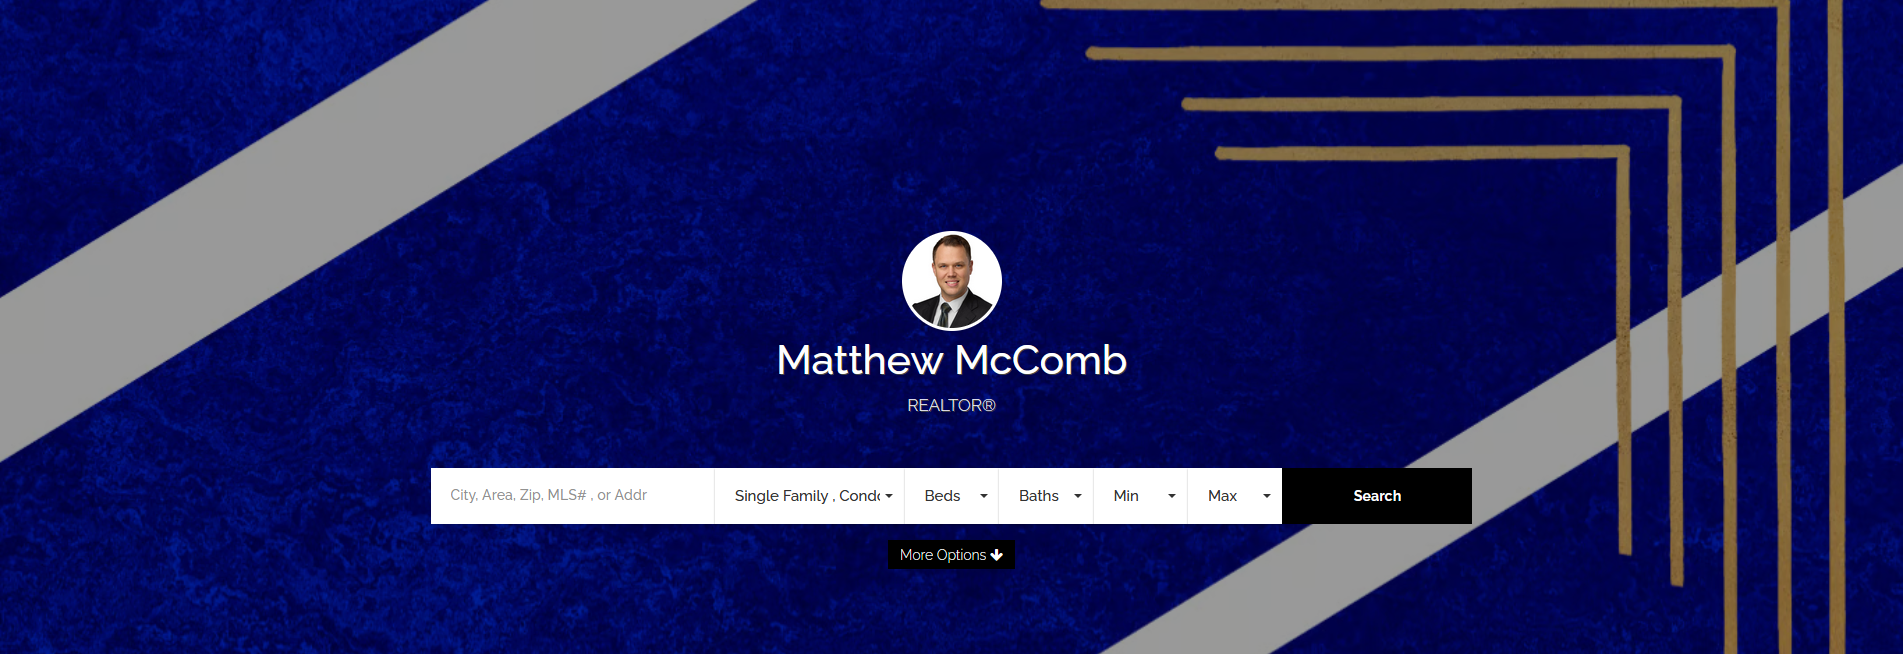 Matthew McComb Search